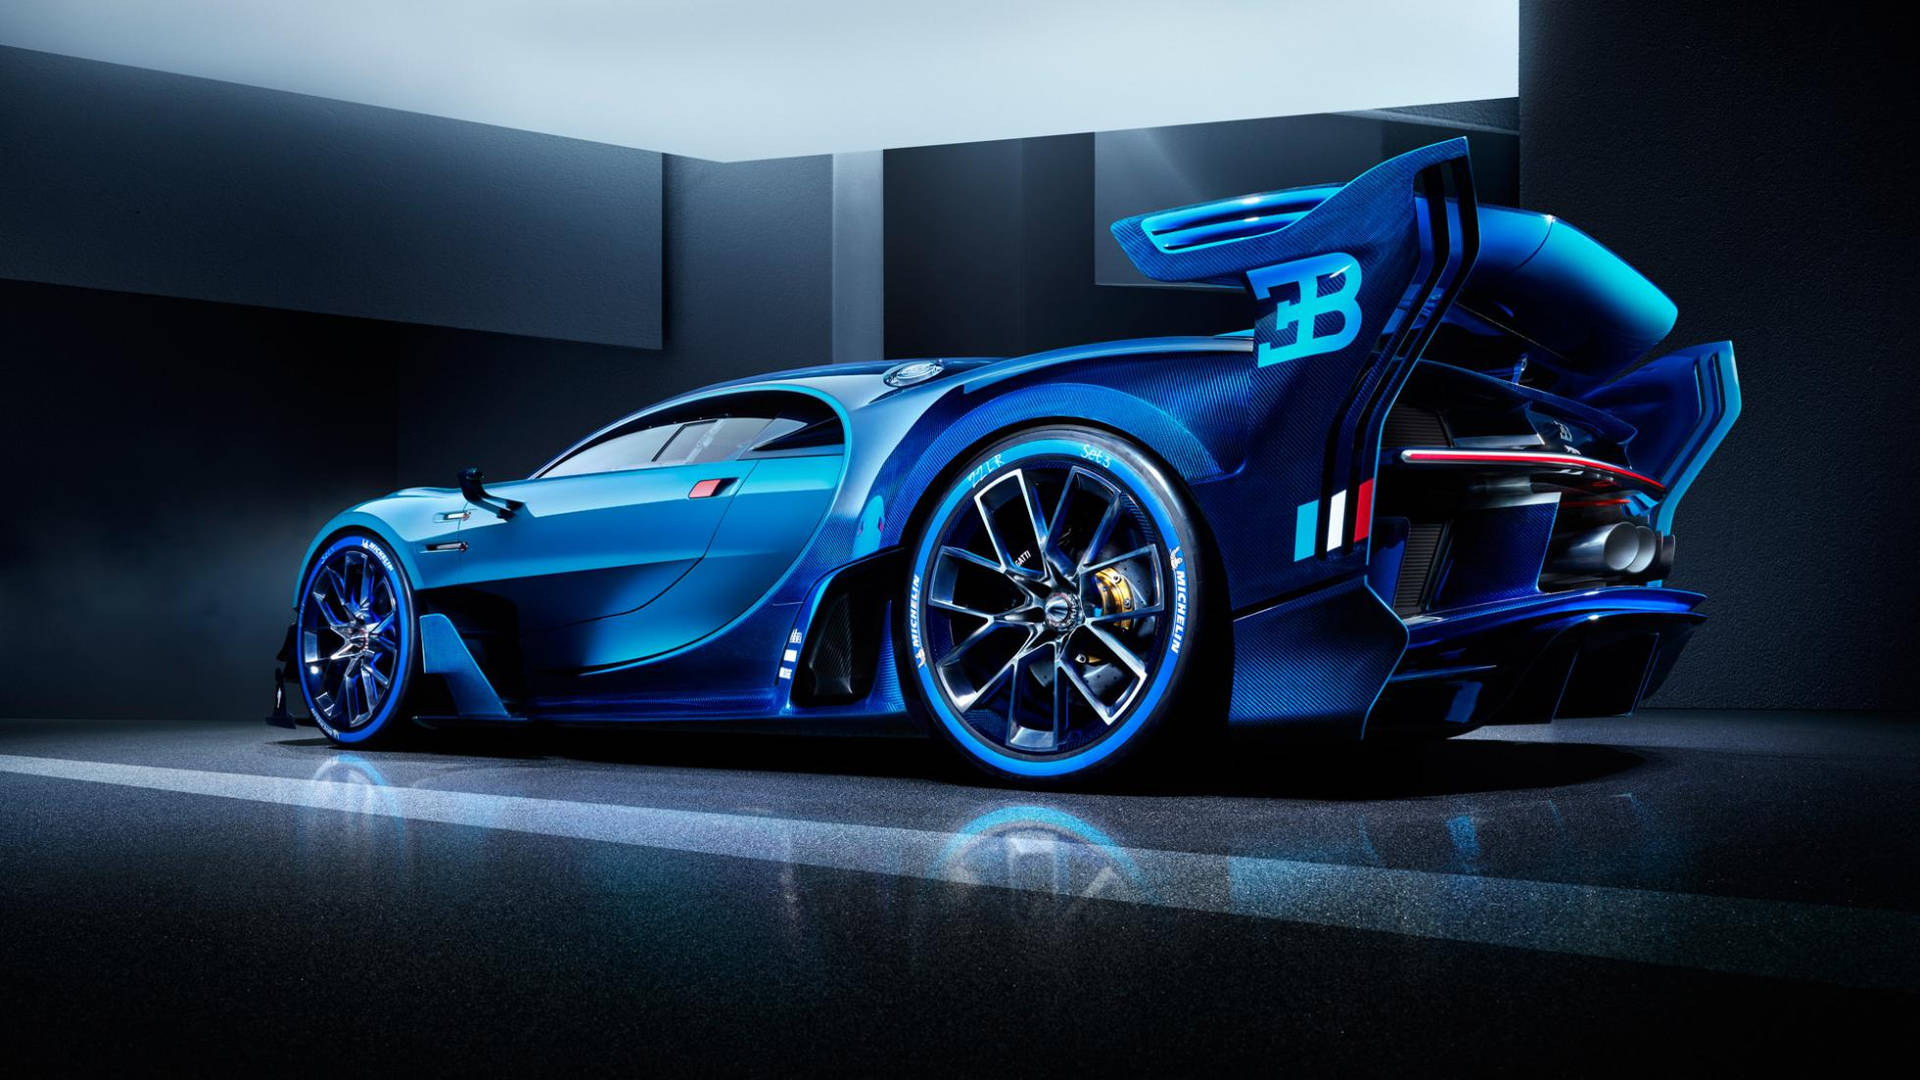 Bugatti3b Blauer Sportwagen Wallpaper